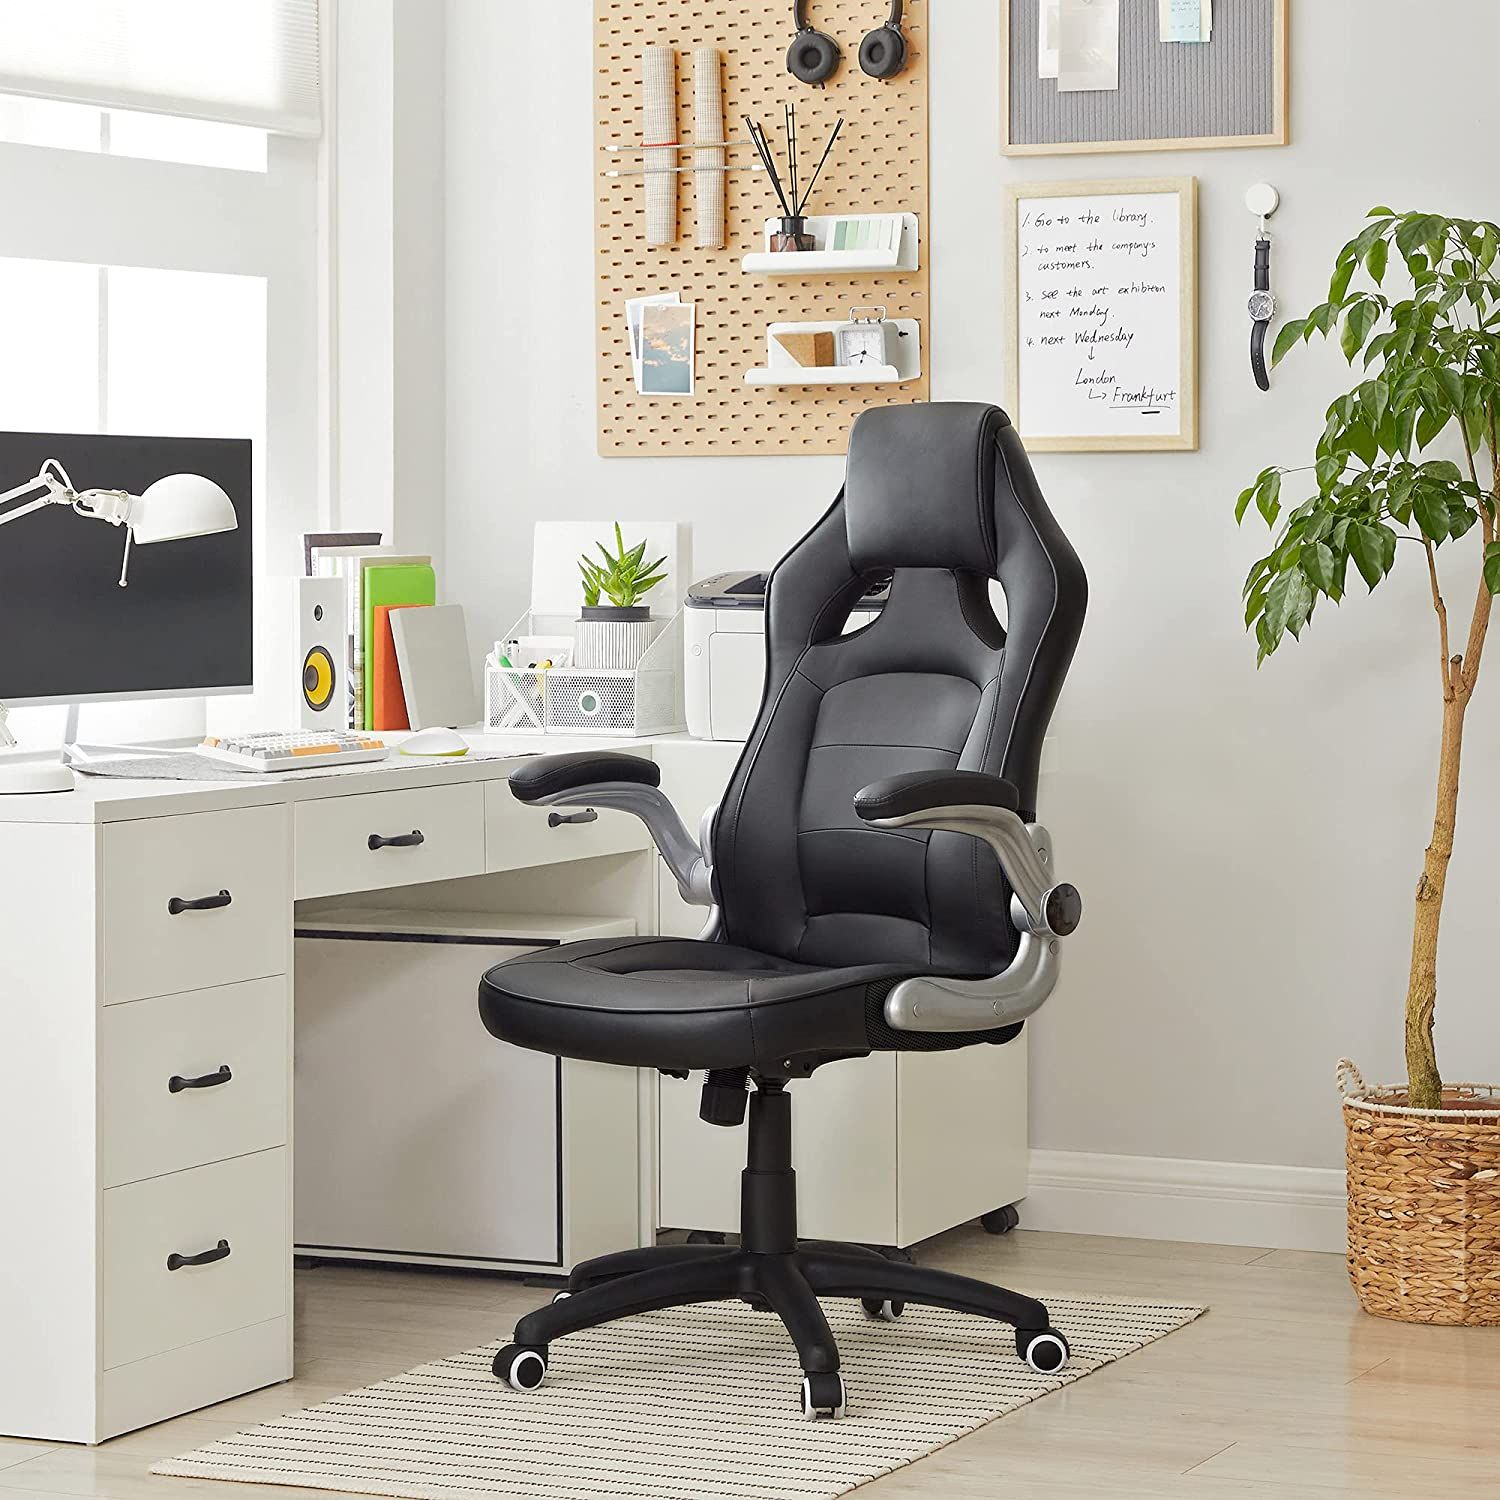 Silla de oficina, silla ergonómica para el hogar, sillas de